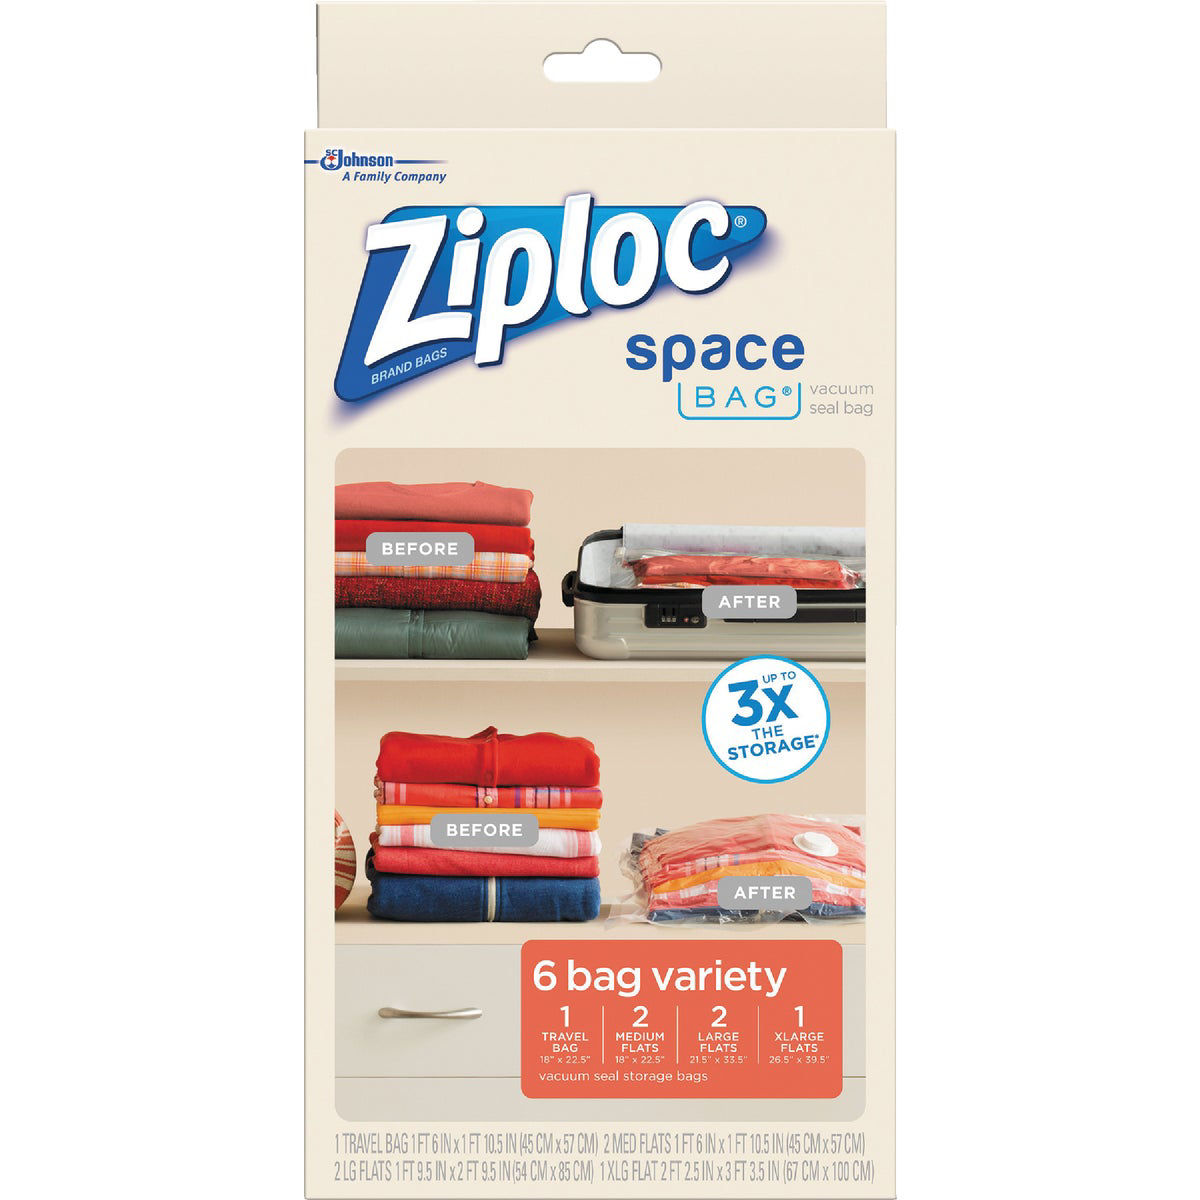 Ziploc Space Bag 3 Bag Combo 3X The Storage New & Sealed